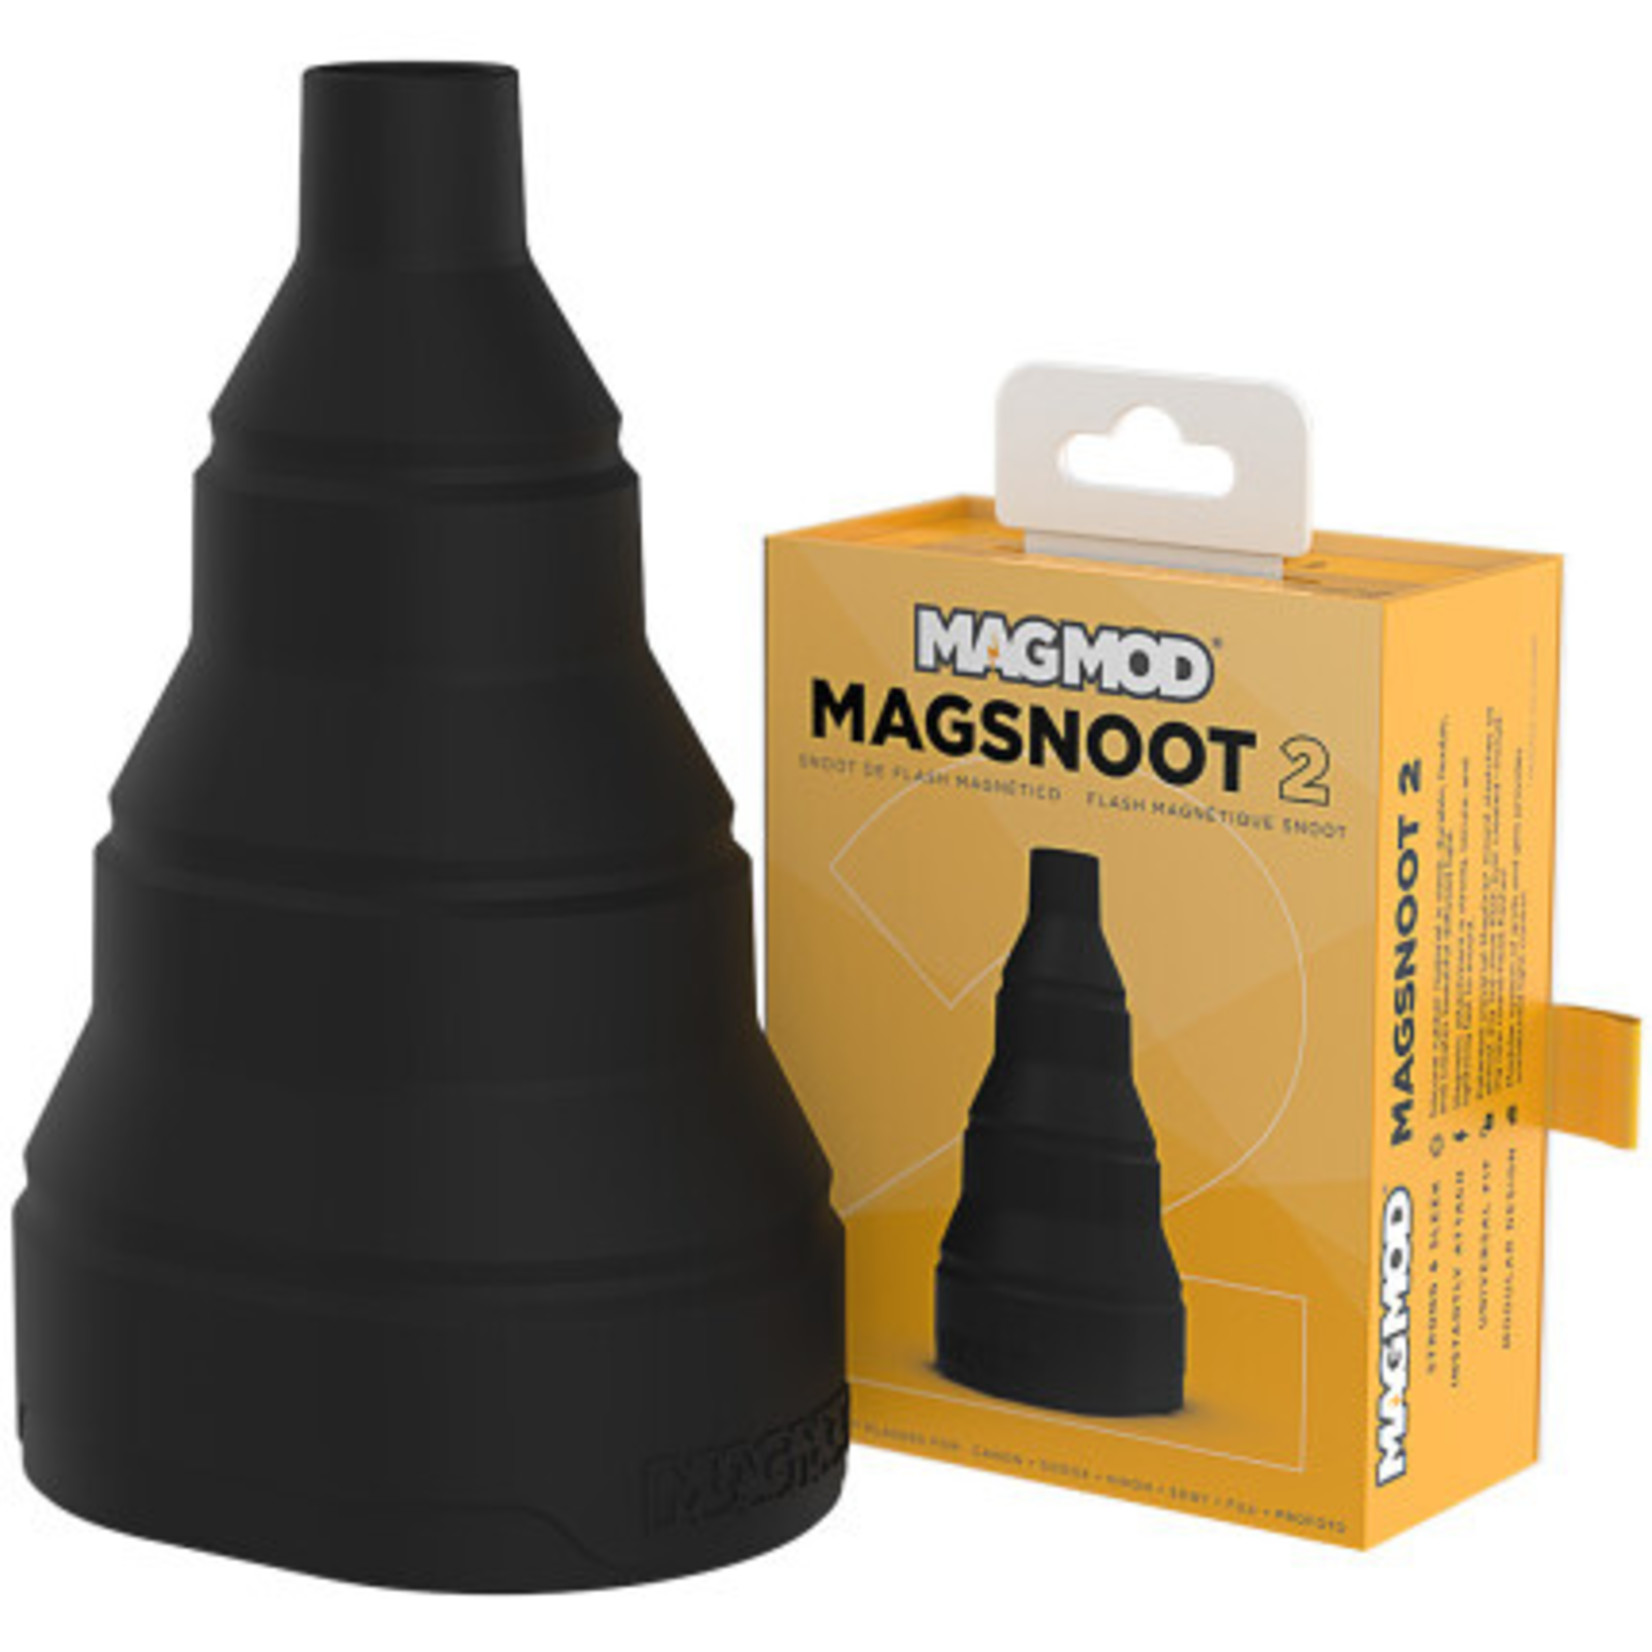 MagMod MagMod MagSnoot 2